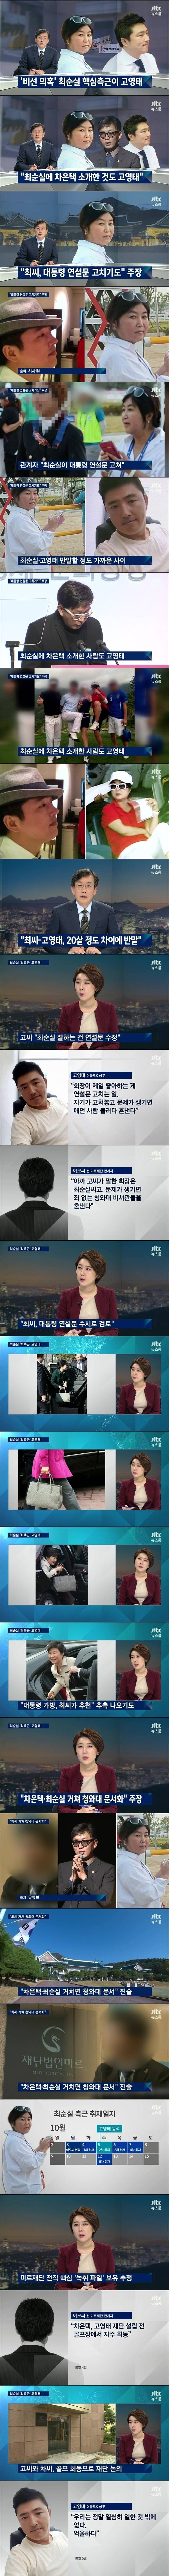 [JTBC] '최순실 회사' 관리한 전 펜싱선수.JPG | 인스티즈